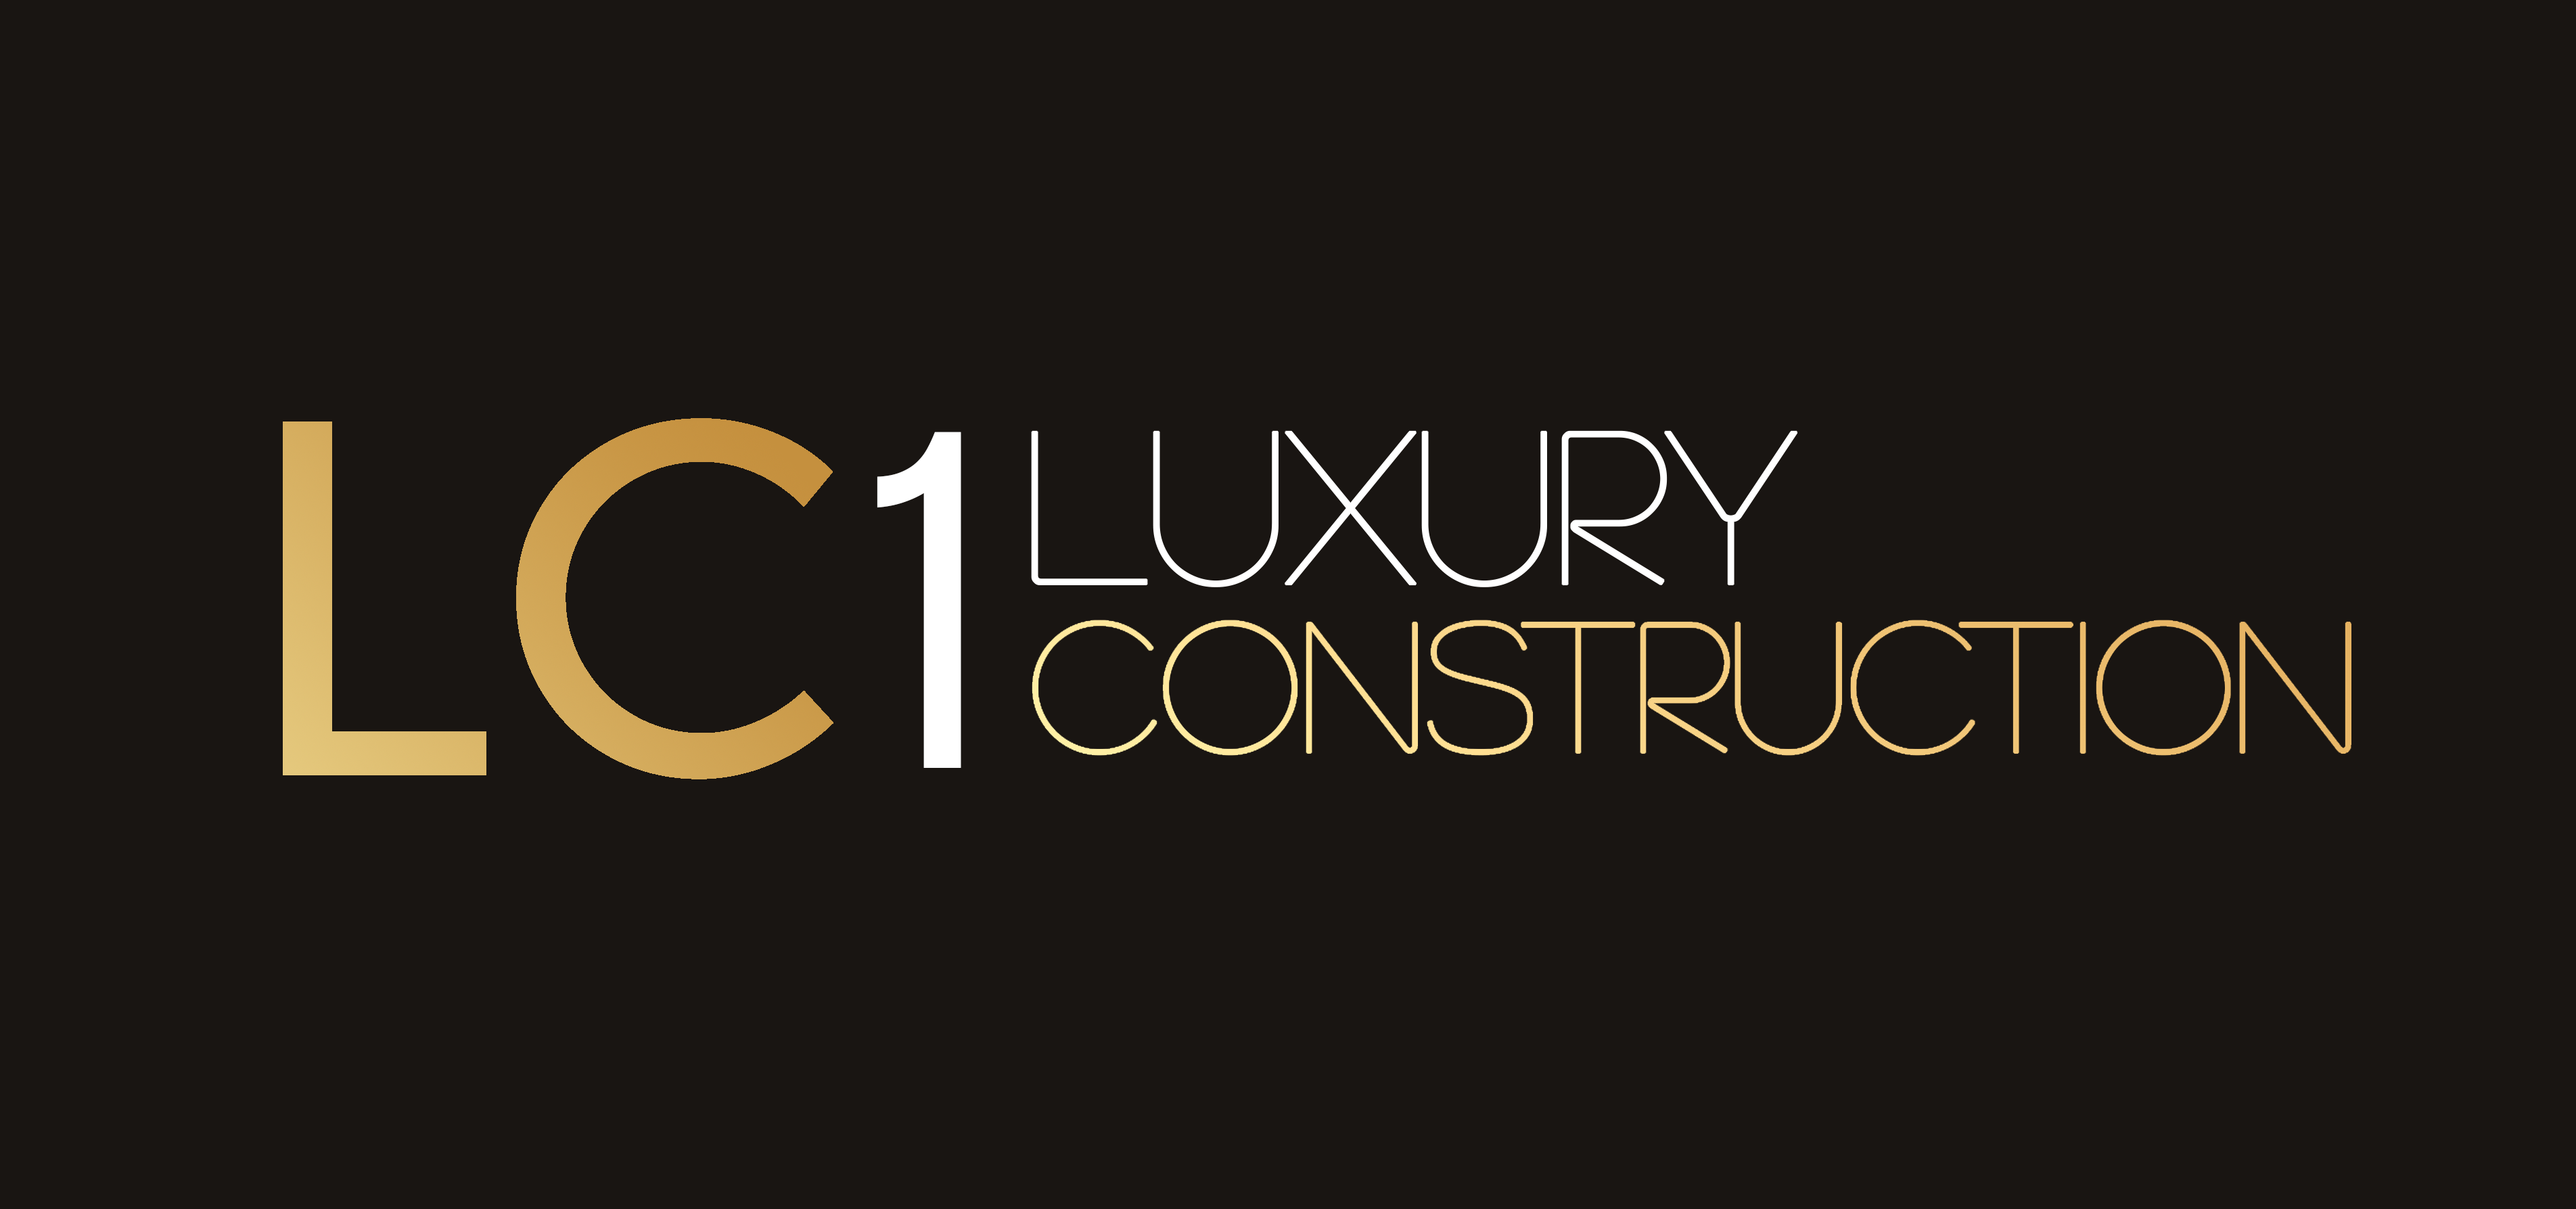 Logo of LC1 Luxury Construction Construction Contractors In Sutton, Surrey